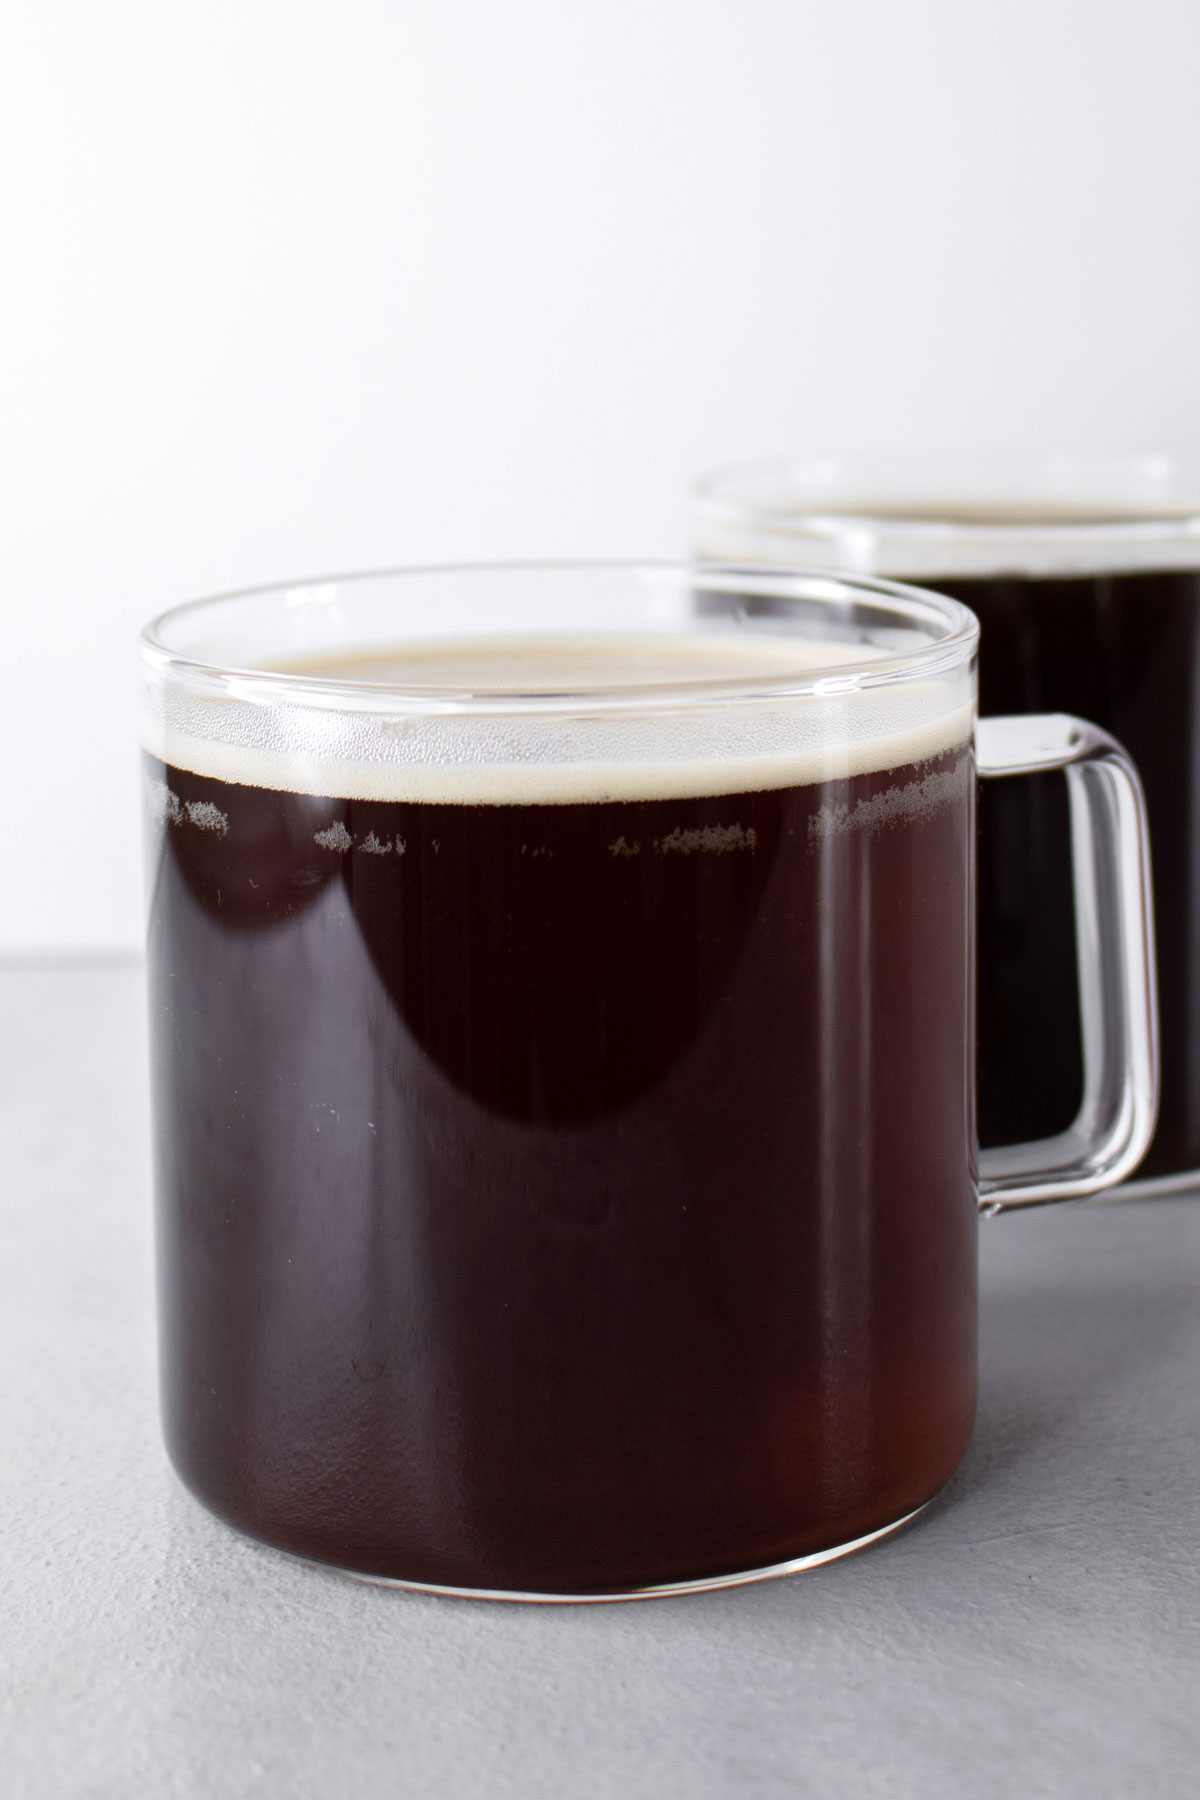 Americano coffee in 2 glass mugs.